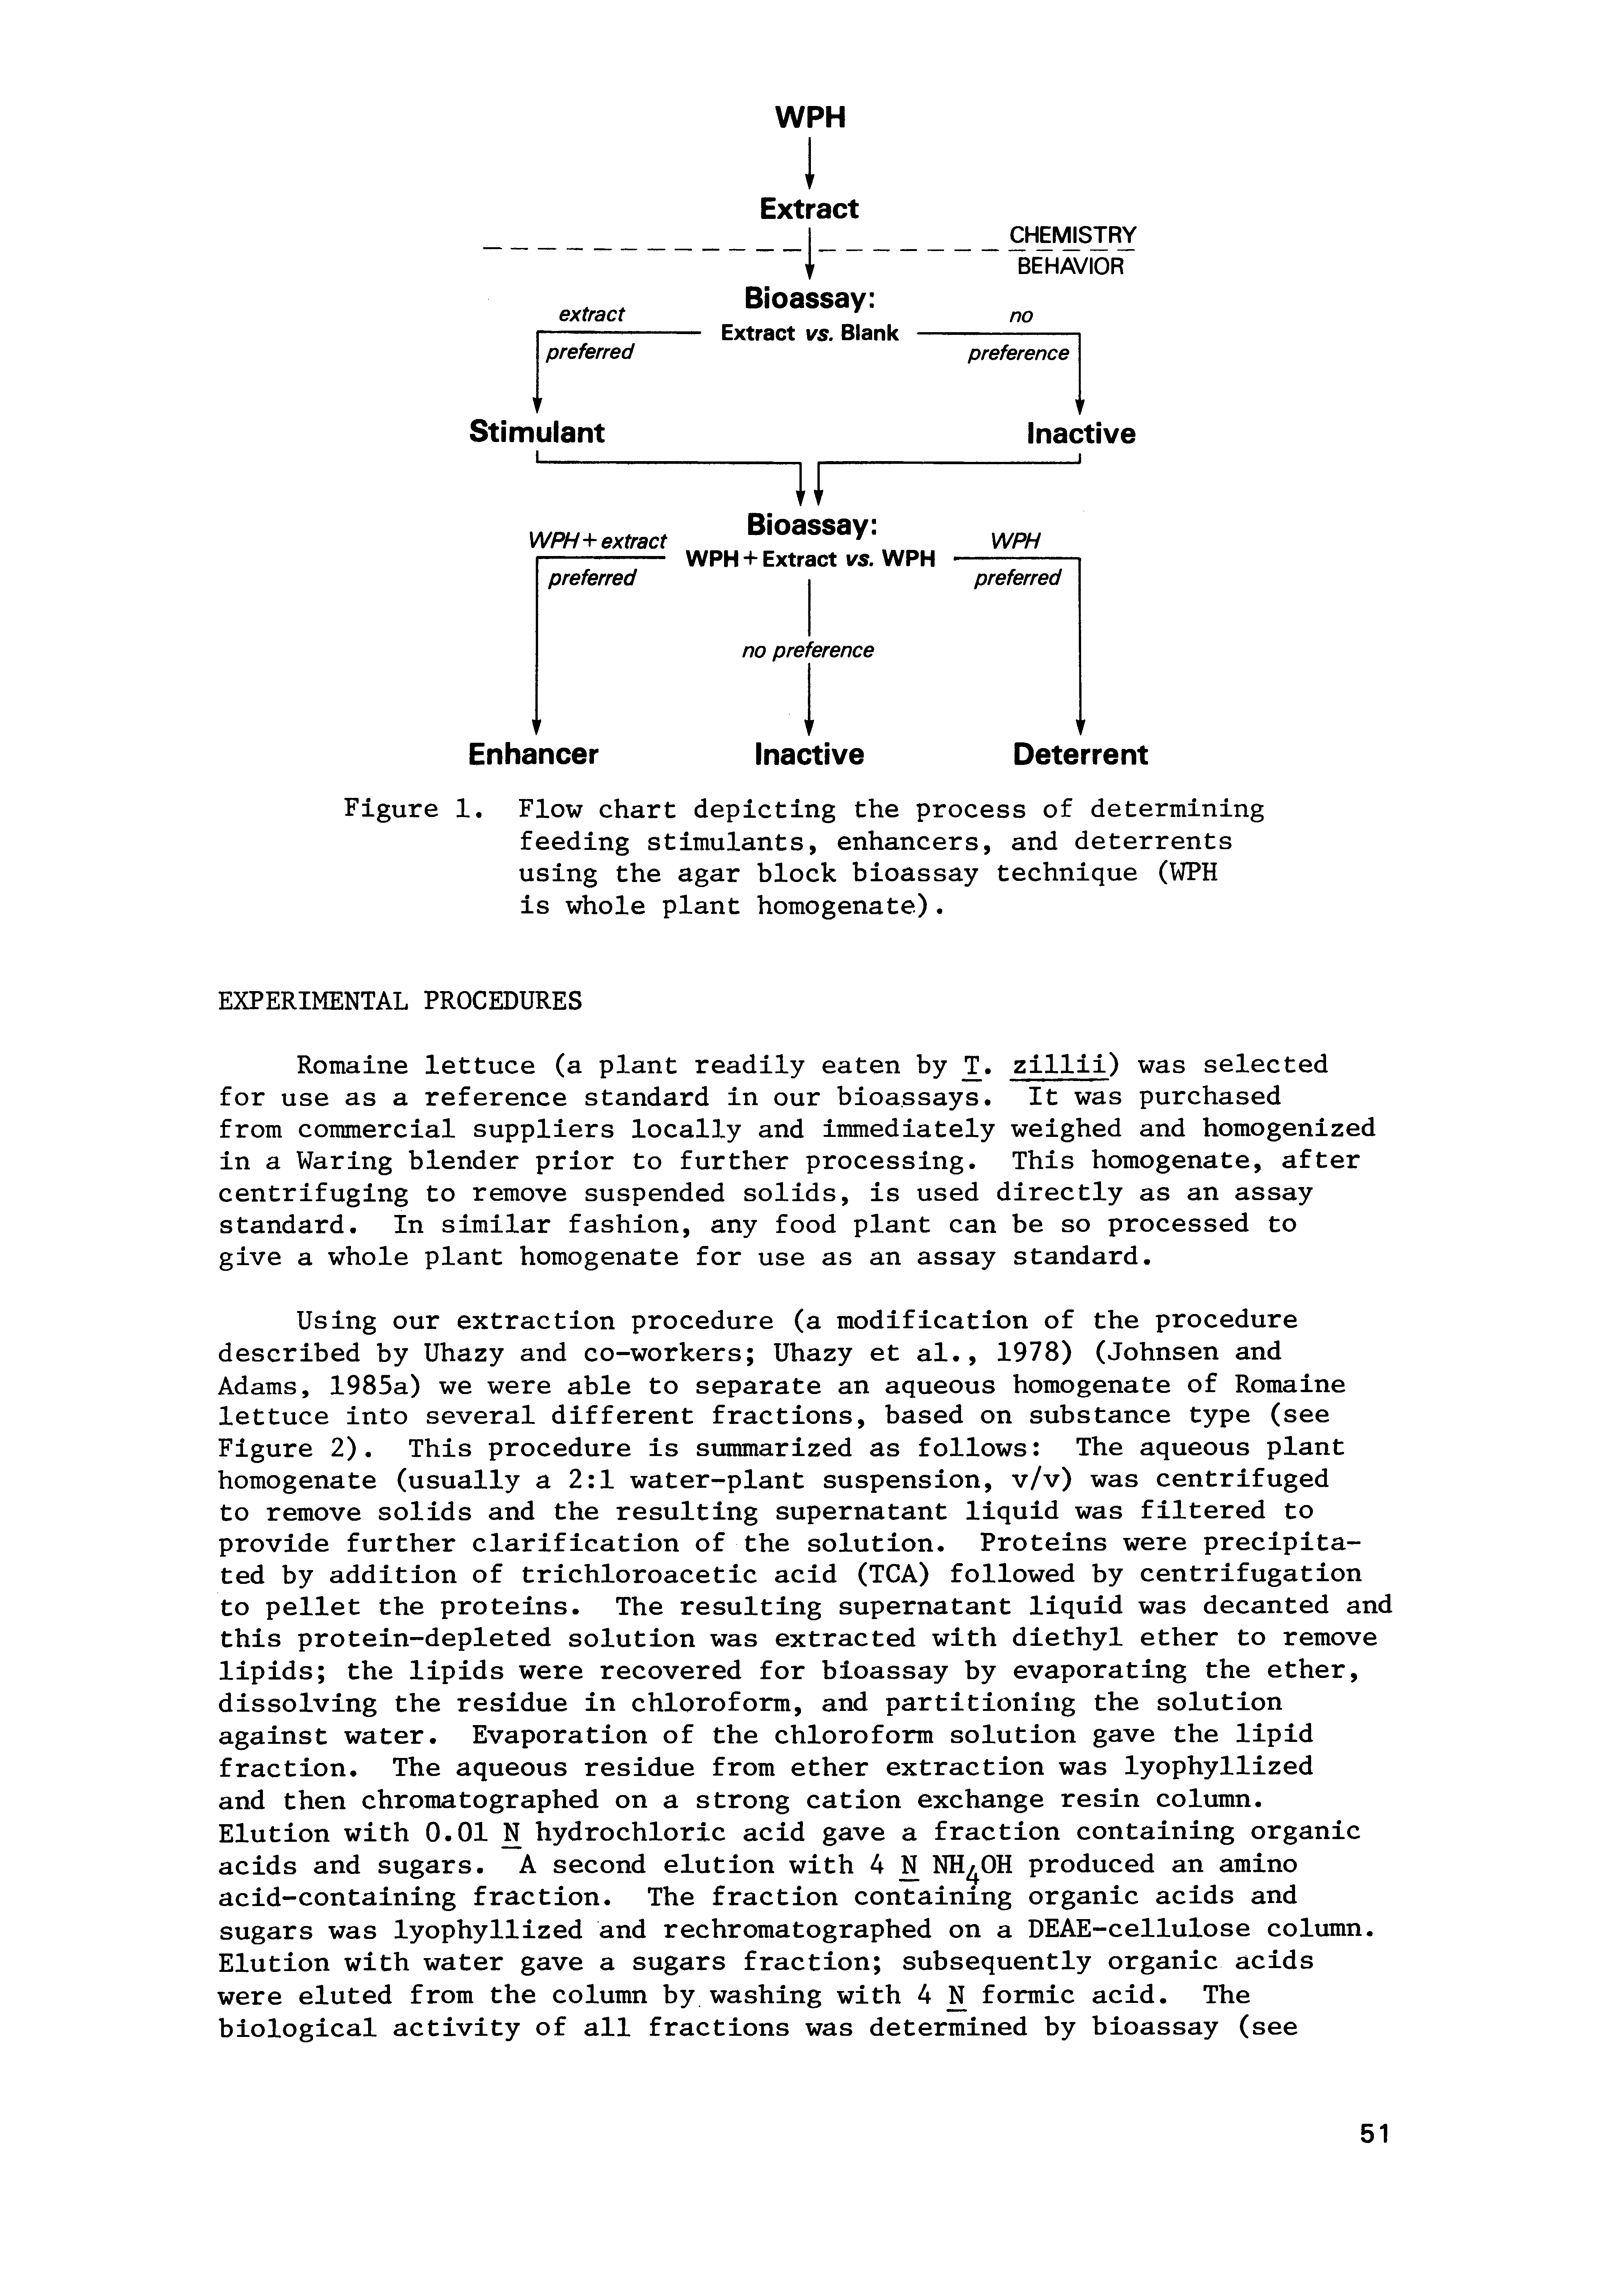 Figure 1. Flow chart depicting the process of determining feeding stimulants, enhancers, and deterrents using the agar block bioassay technique (VJPH is whole plant homogenate.). ...